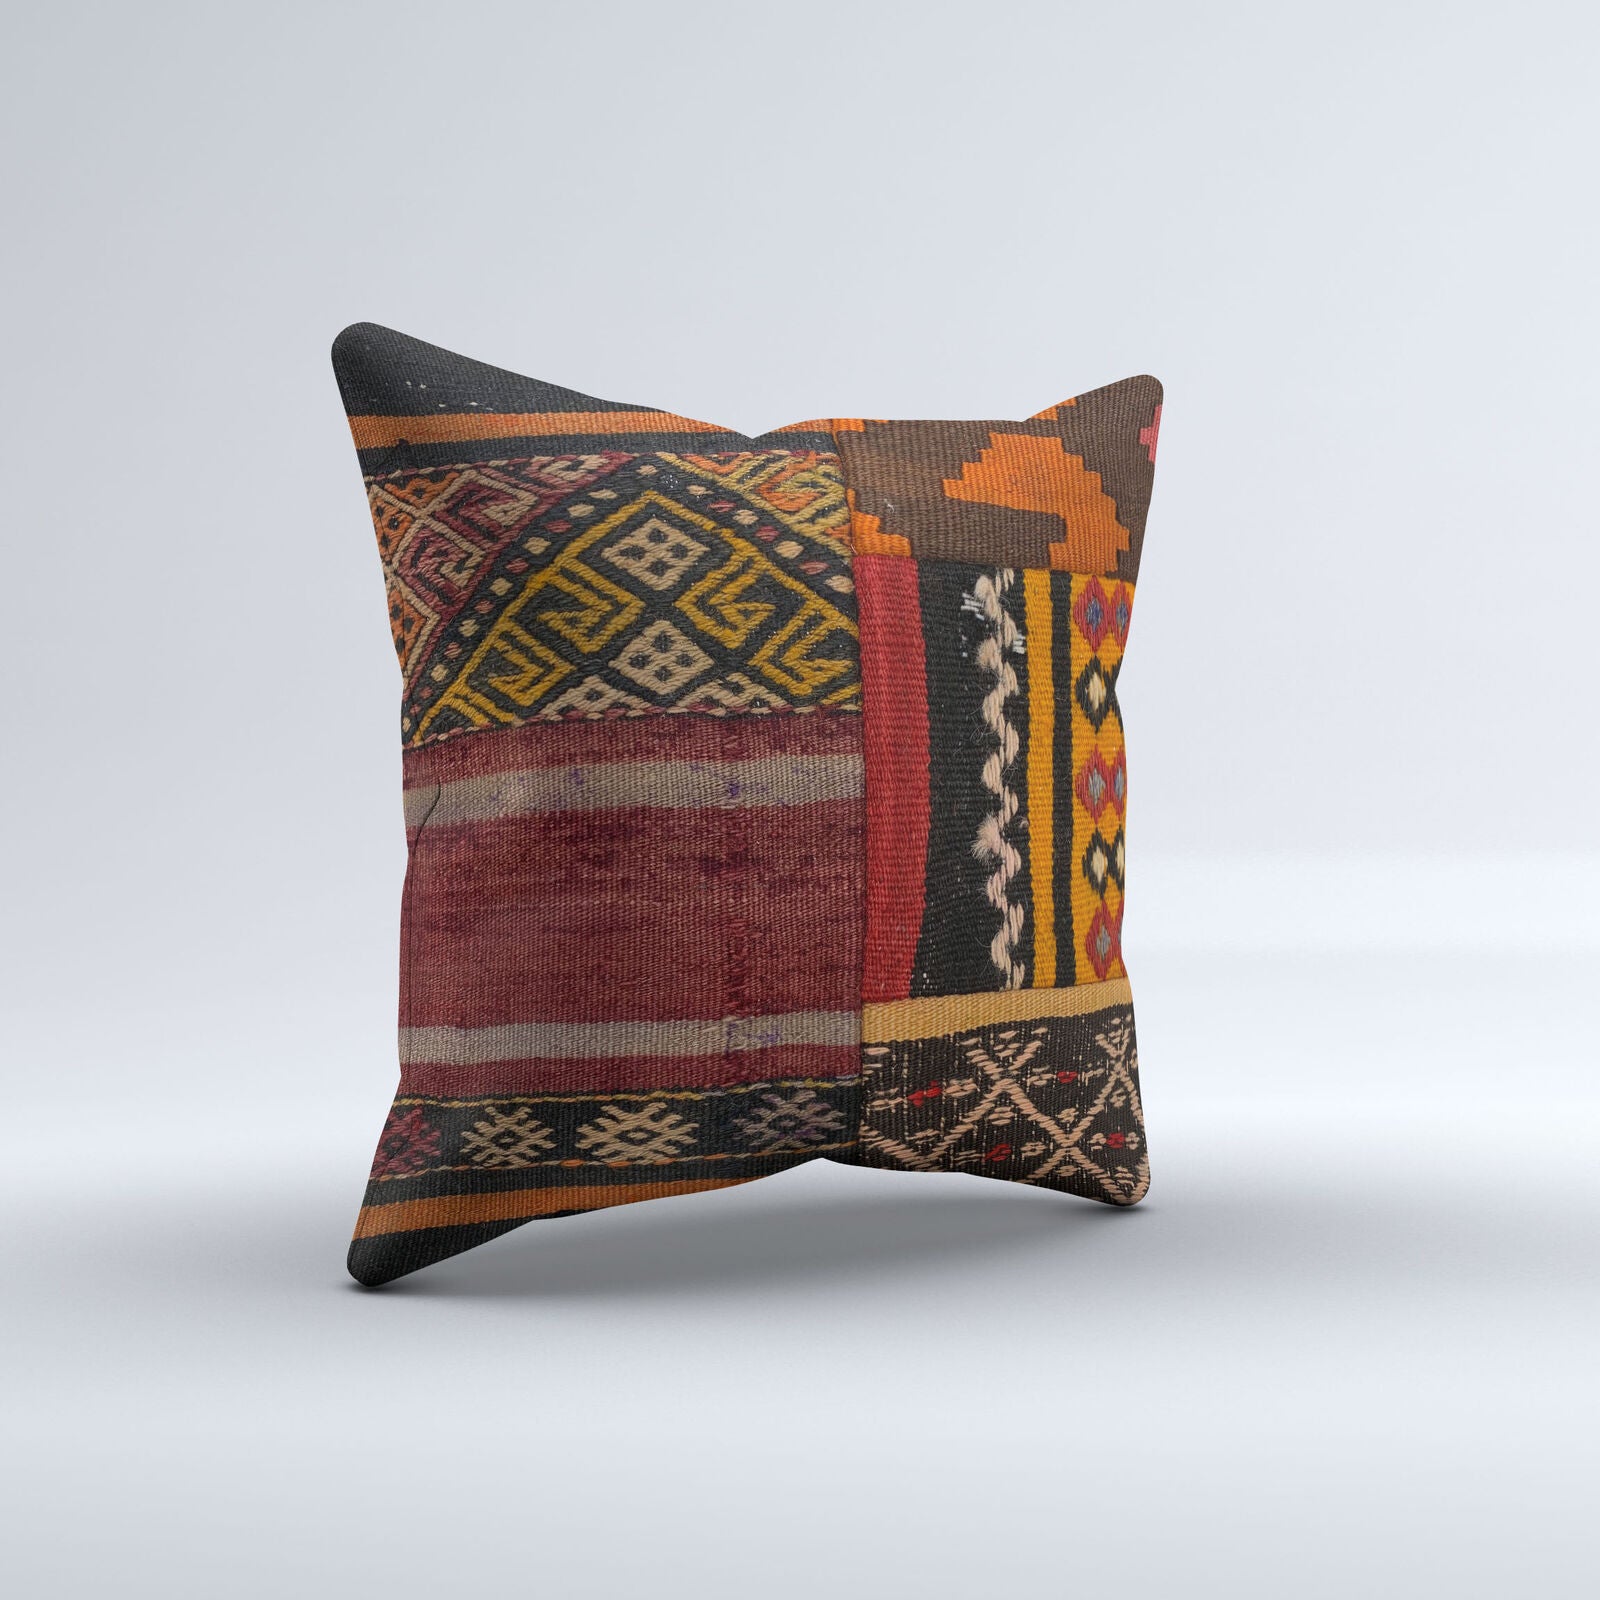 Vintage Turkish Kilim Cushion Cover 40x40 cm 16x16 in  Square Pillowcase 40987